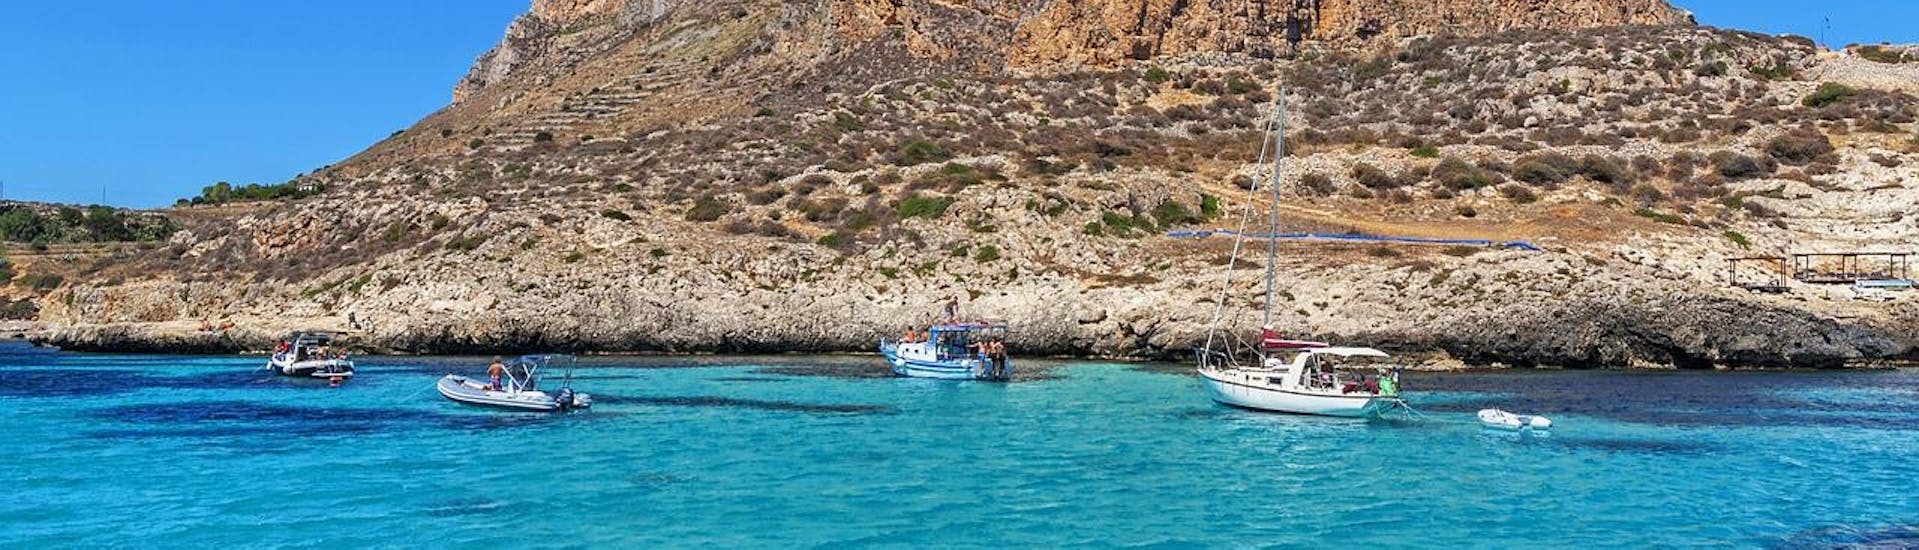 Breathtaking scenery of the Egadi archipelago during a boat trip from San Vito Lo Capo to Favignana and Levanzo with Egadi Navigazione.